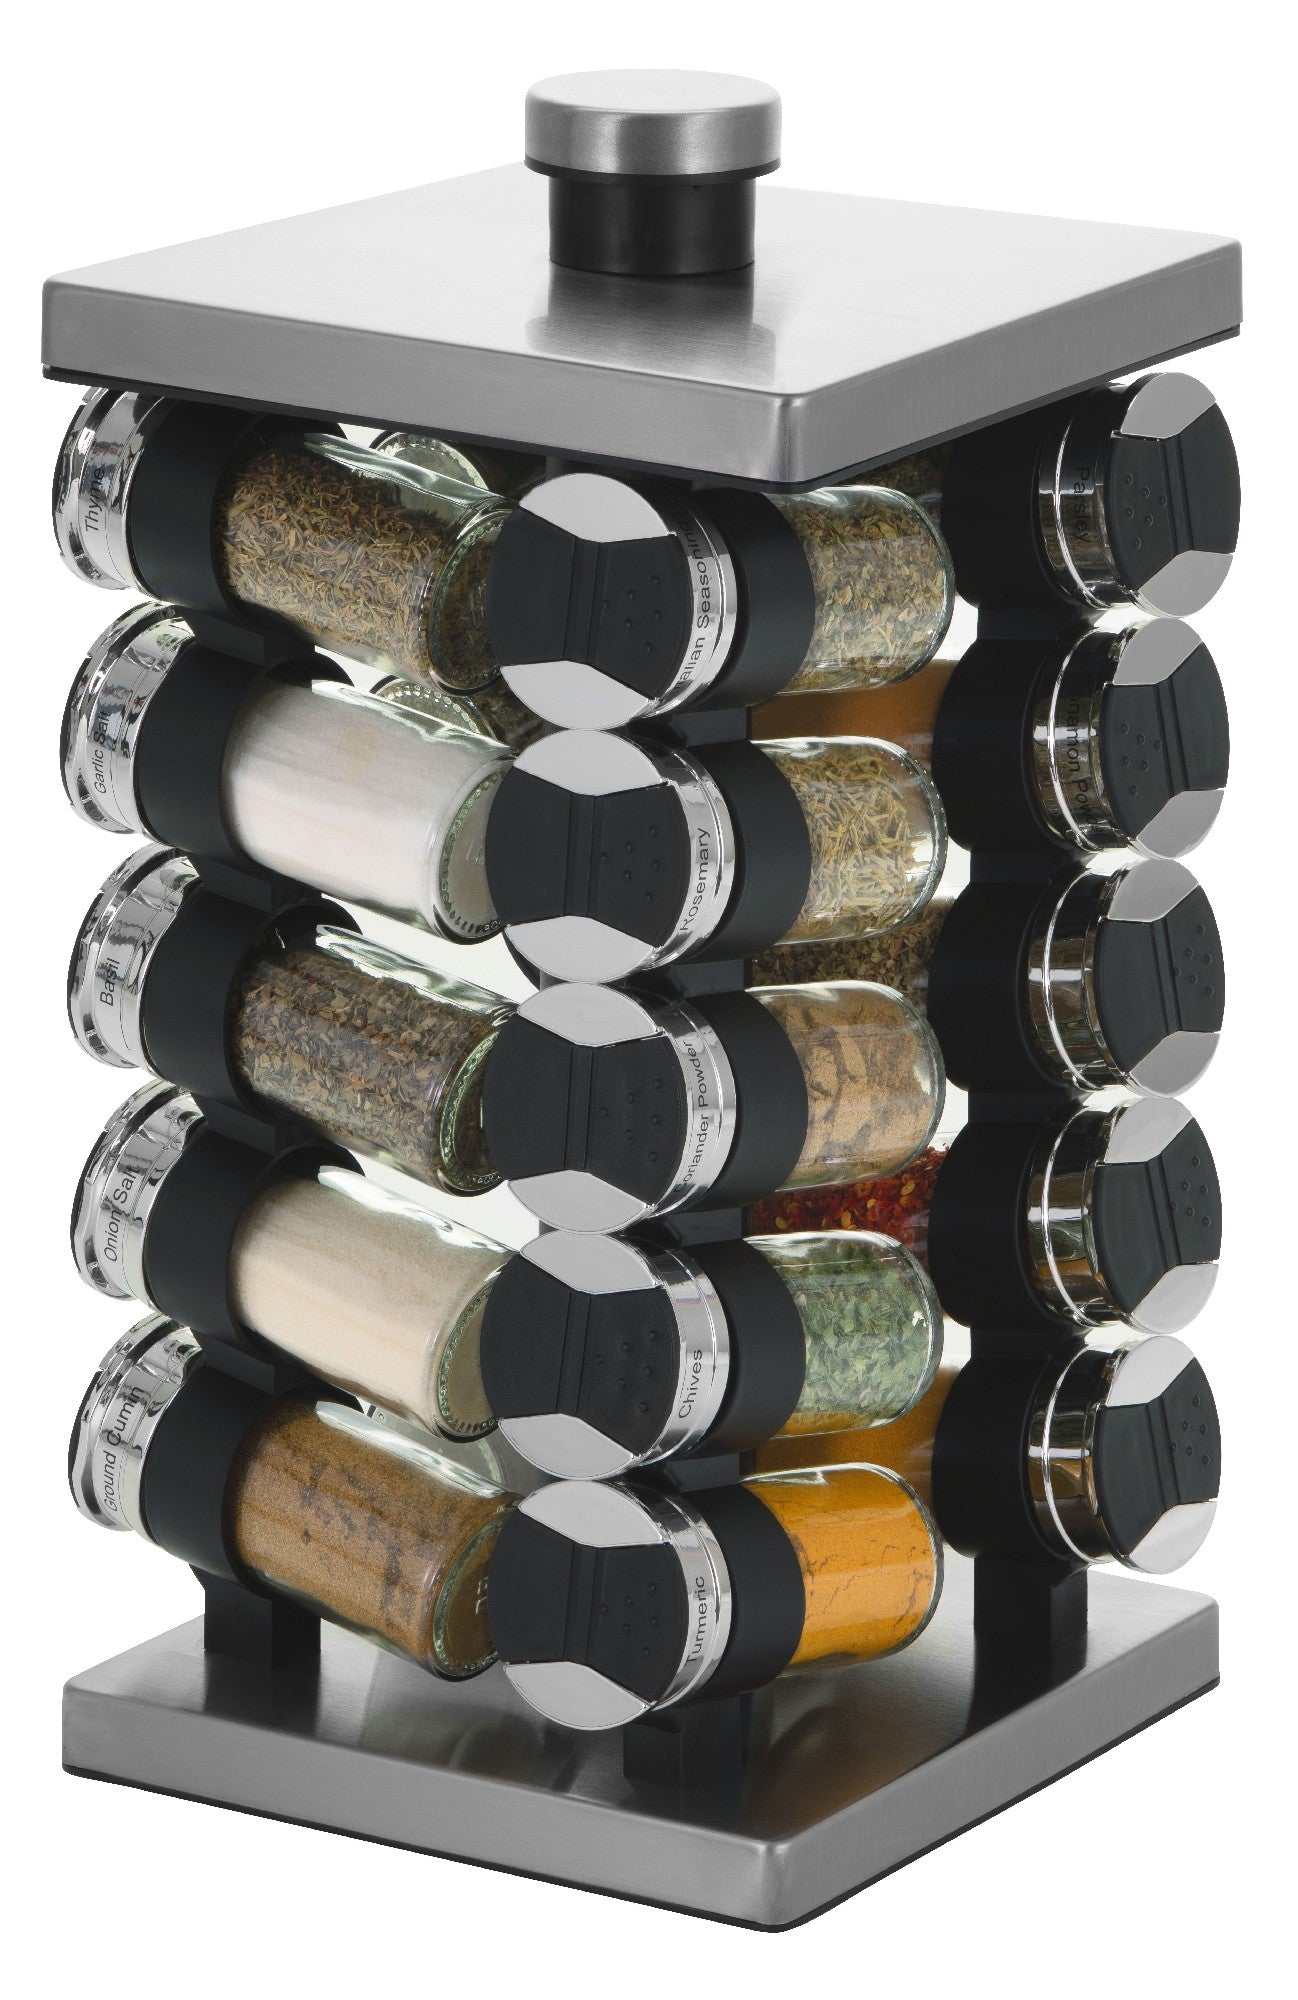 Spice Rack with 20 Jars, Rotating Spice Rack Organizer, Seasoning